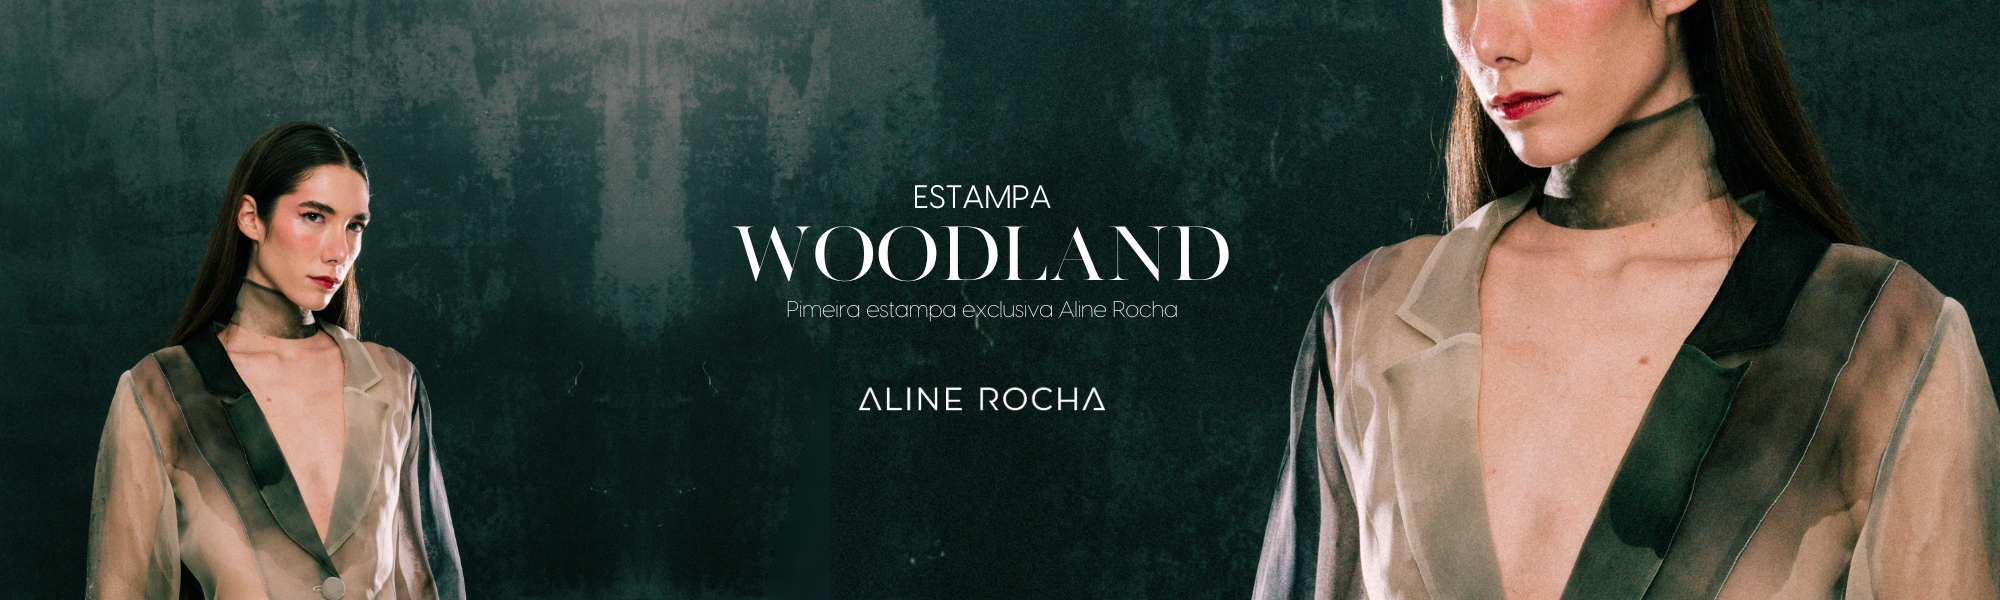 Estampa Woodland - Estampa exclusiva da marca Aline Rocha